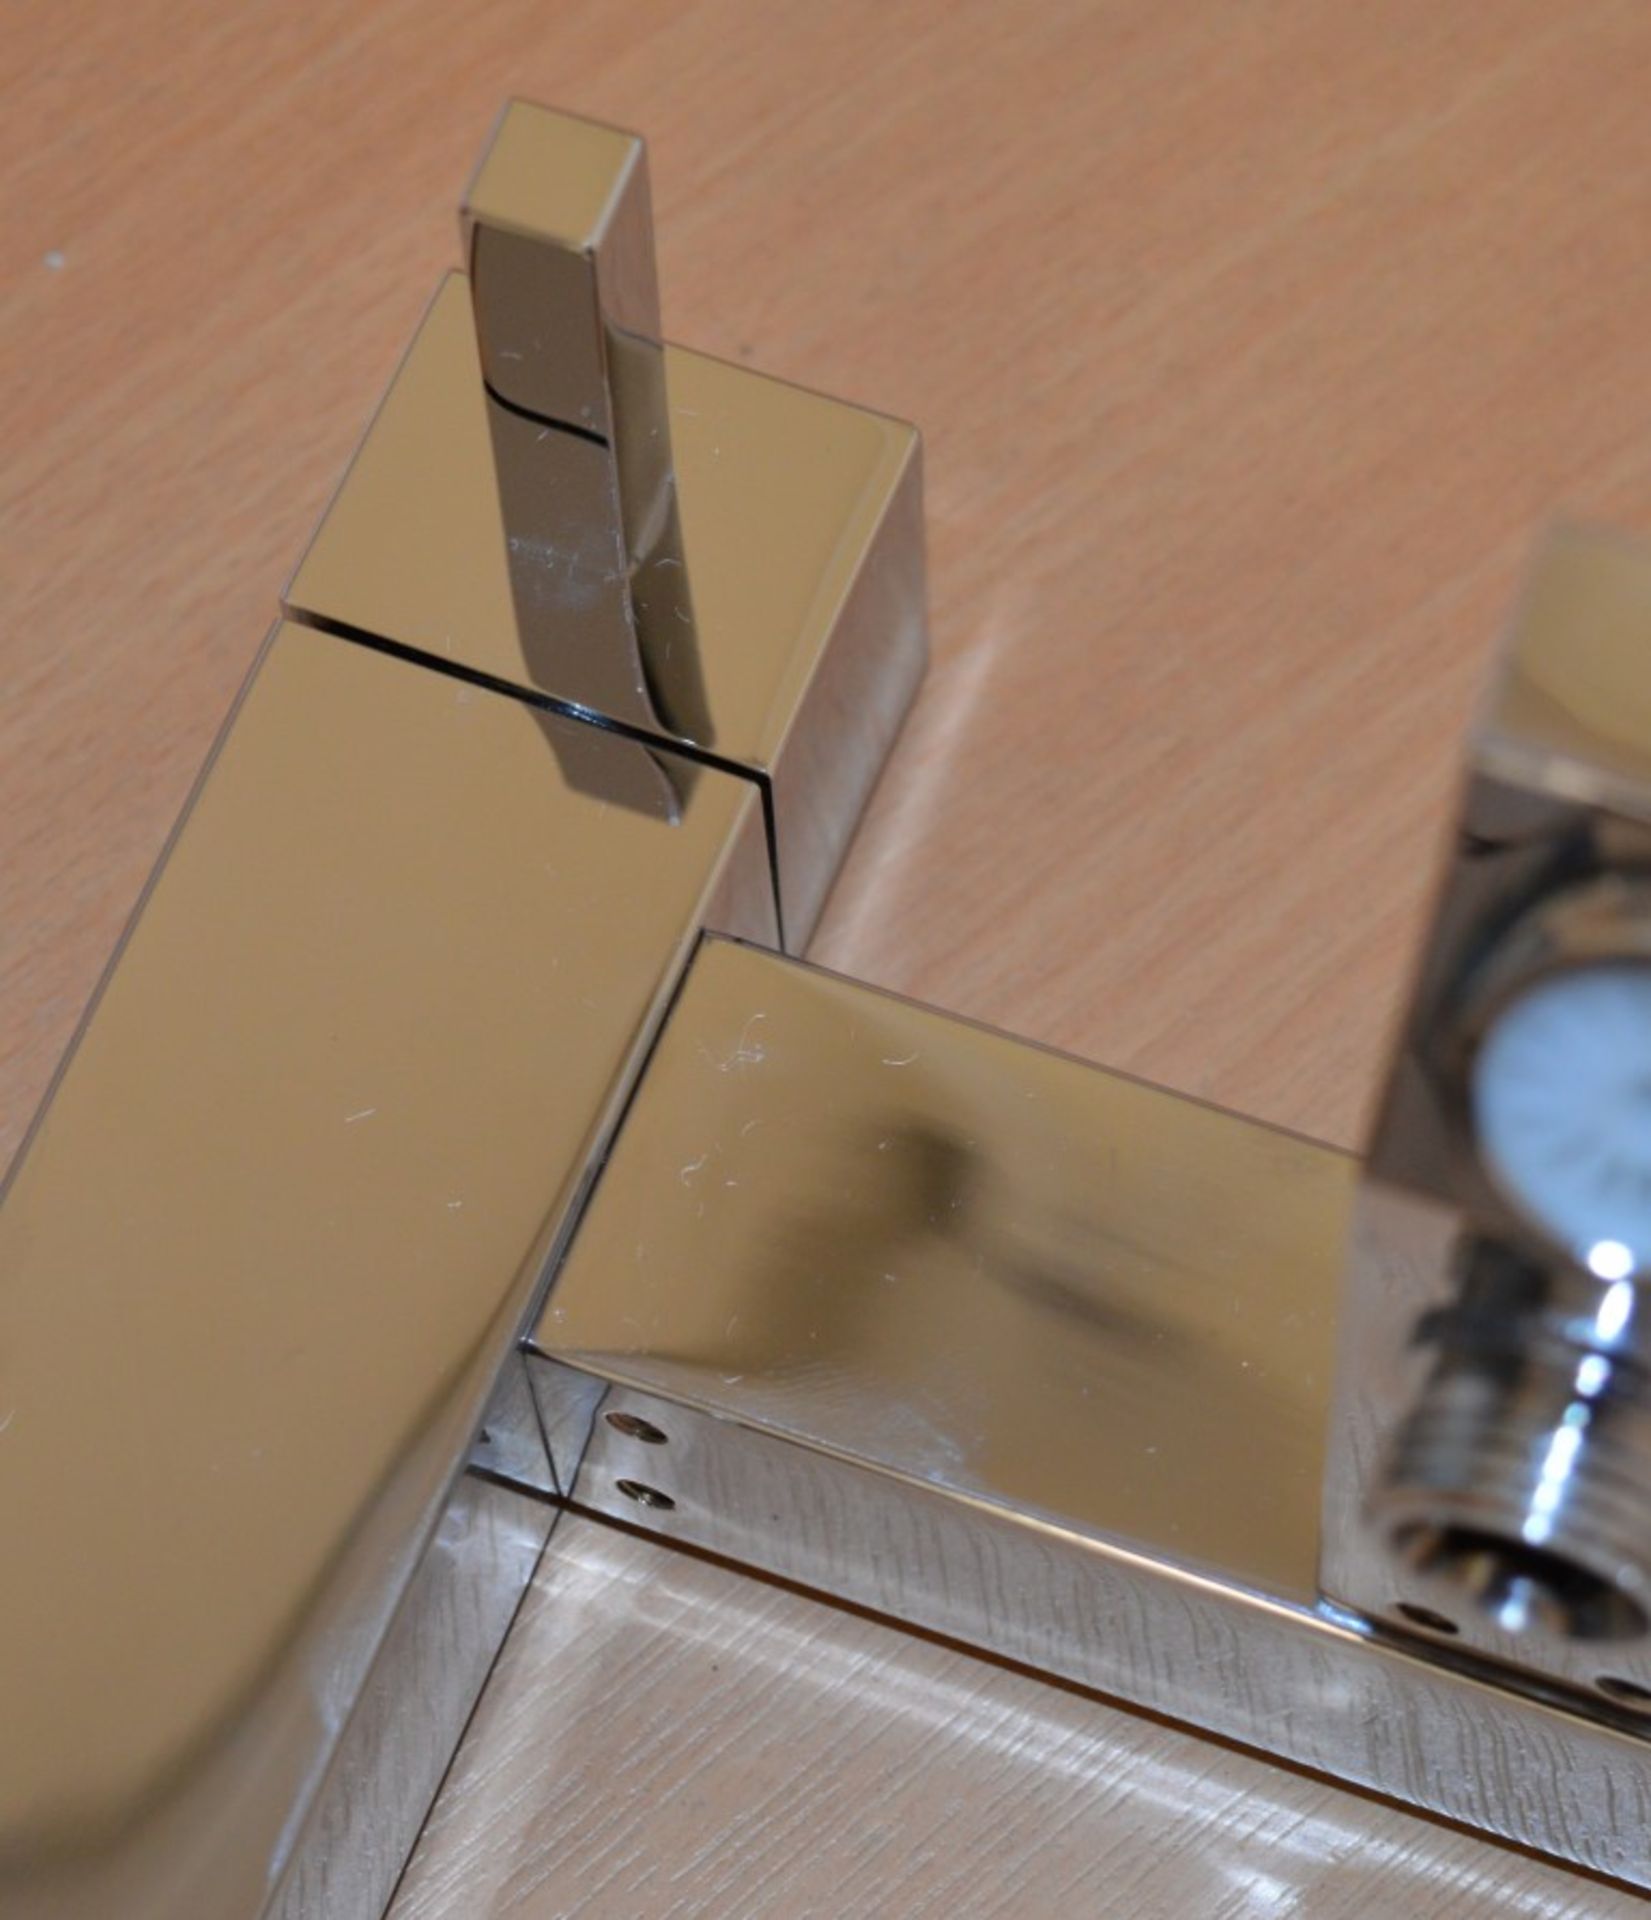 1 x Verona Deck Bath Shower Mixer Tap - Vogue Bathrooms - Modern Bath Mixer Tap in Bright Chrome - Image 10 of 16